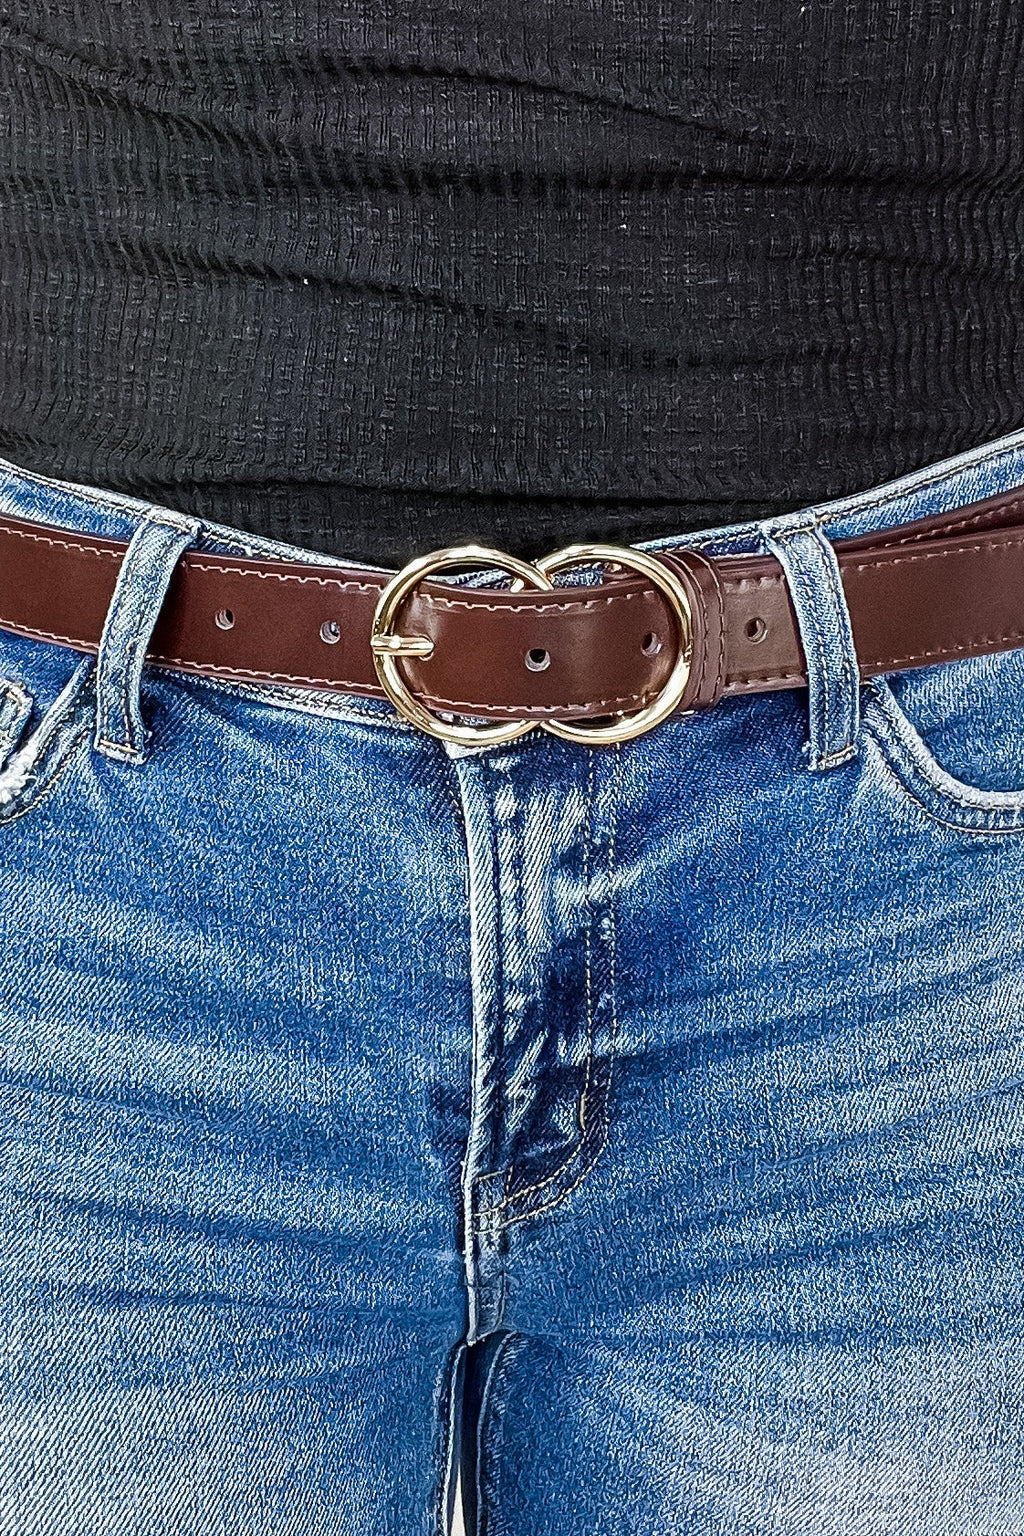 Emily Belt- {Black, Brown, Camel & White} Vegan Leather Belt w/ Double O Ring Detail